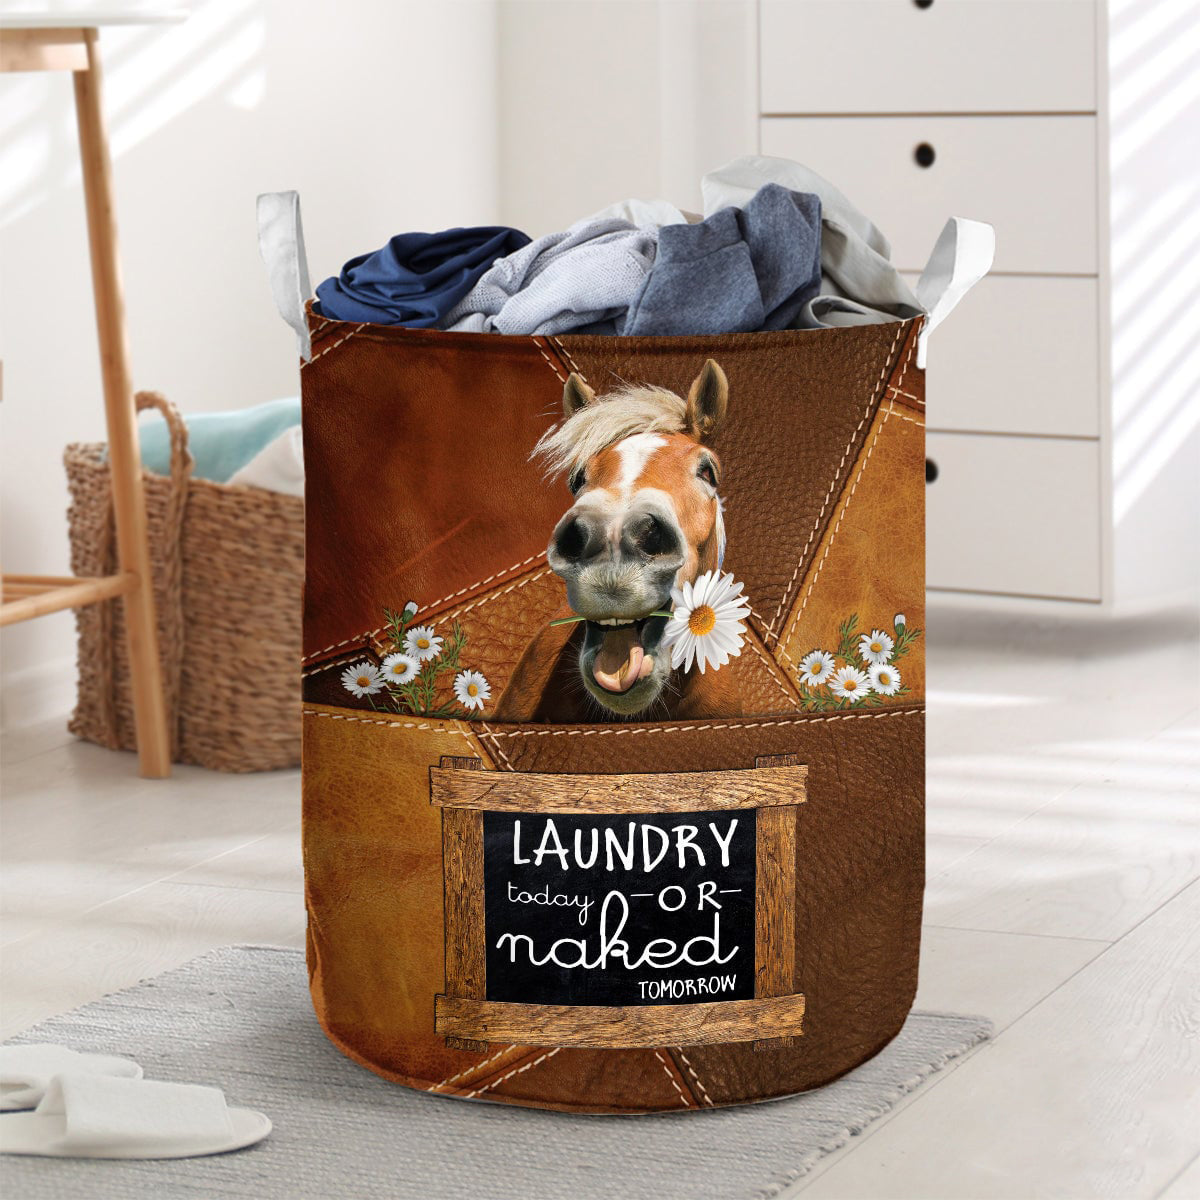 Horse-laundry today or naked tomorrow laundry basket